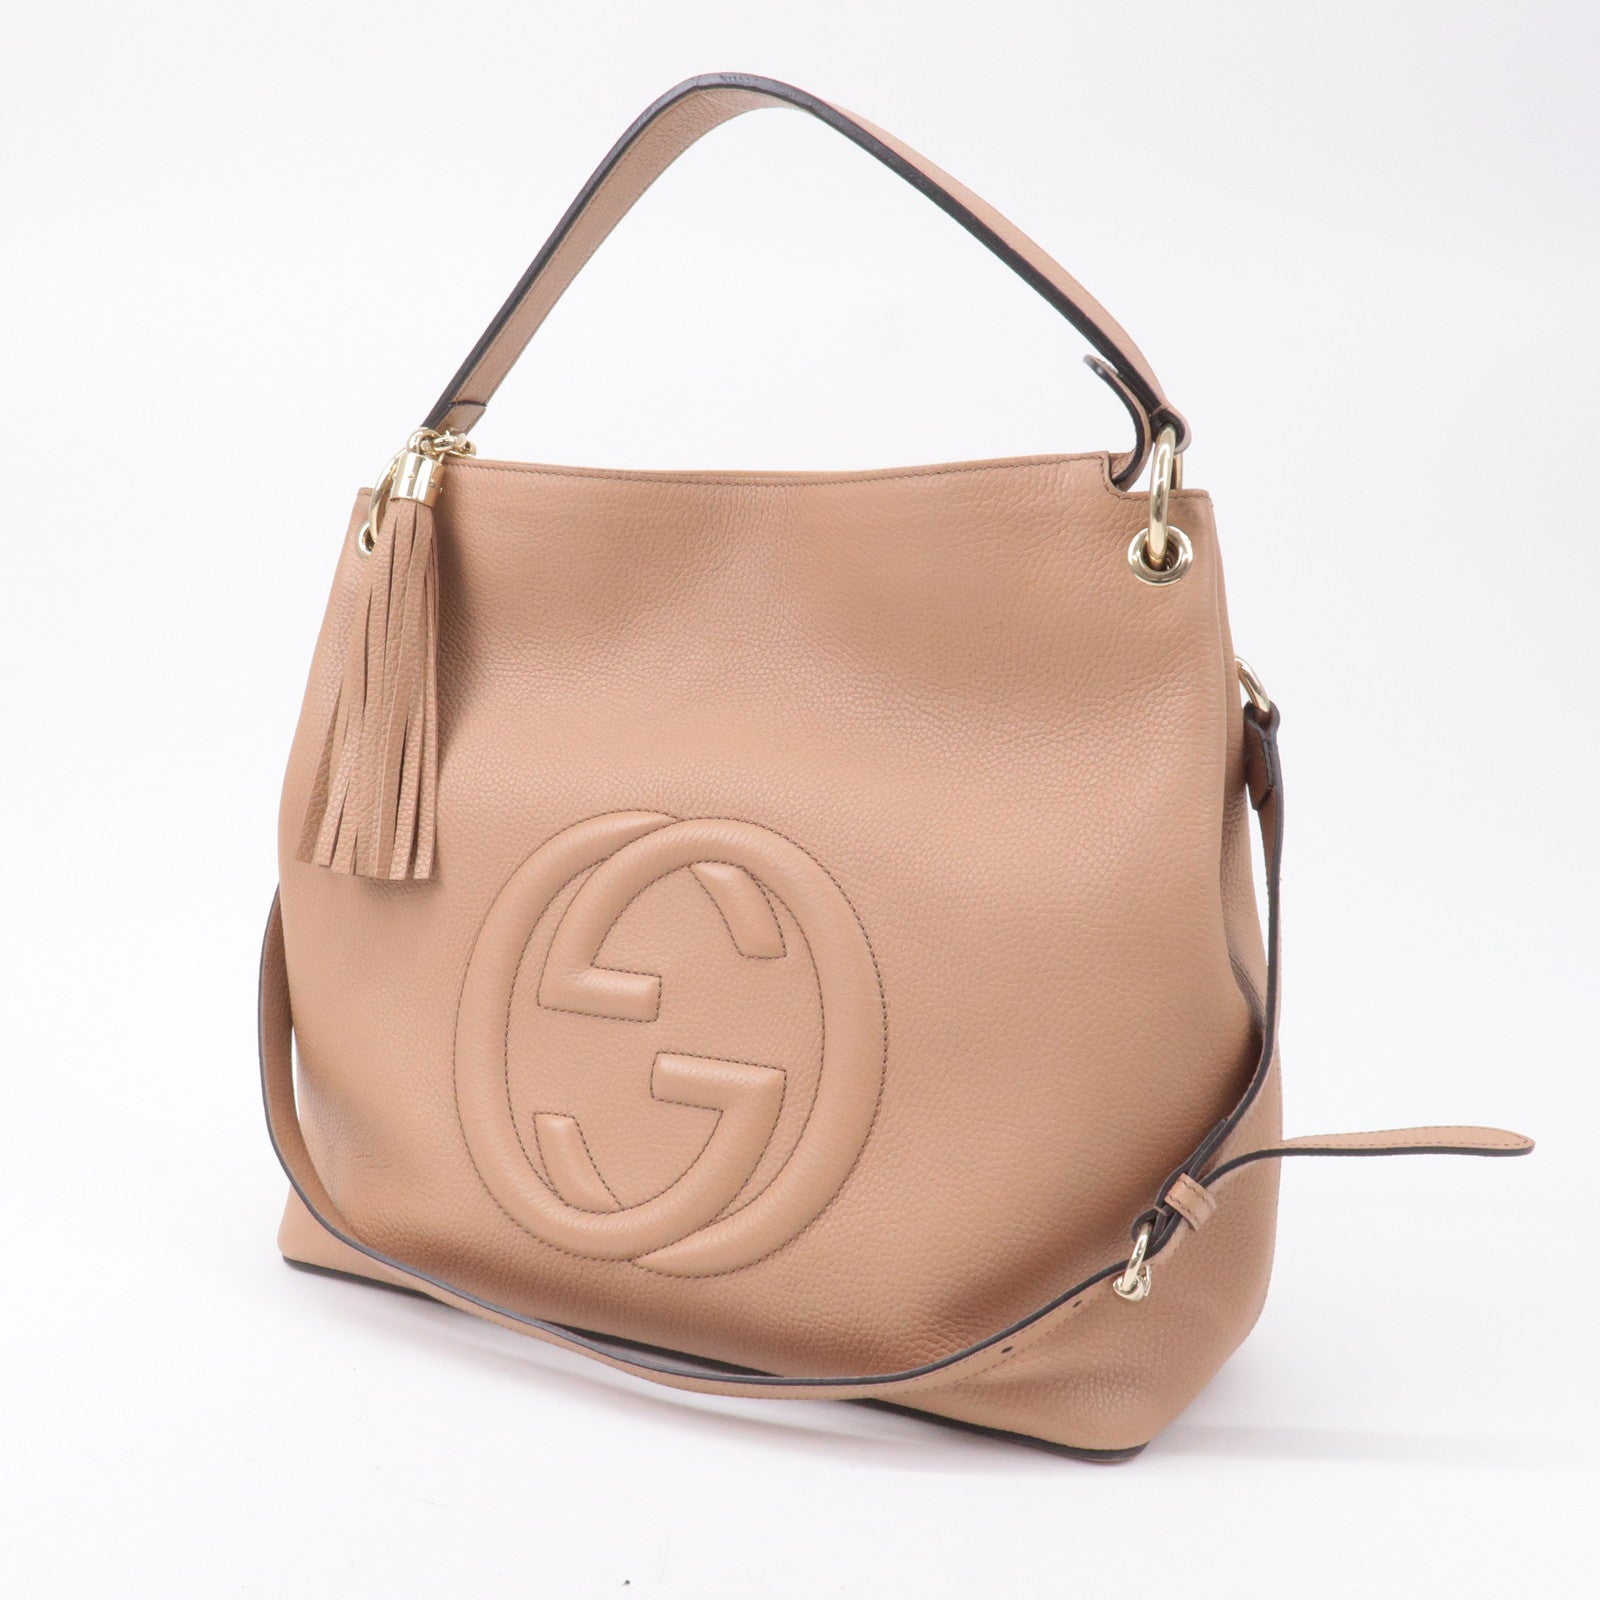 Gucci Soho Large Hobo Bag in Brown